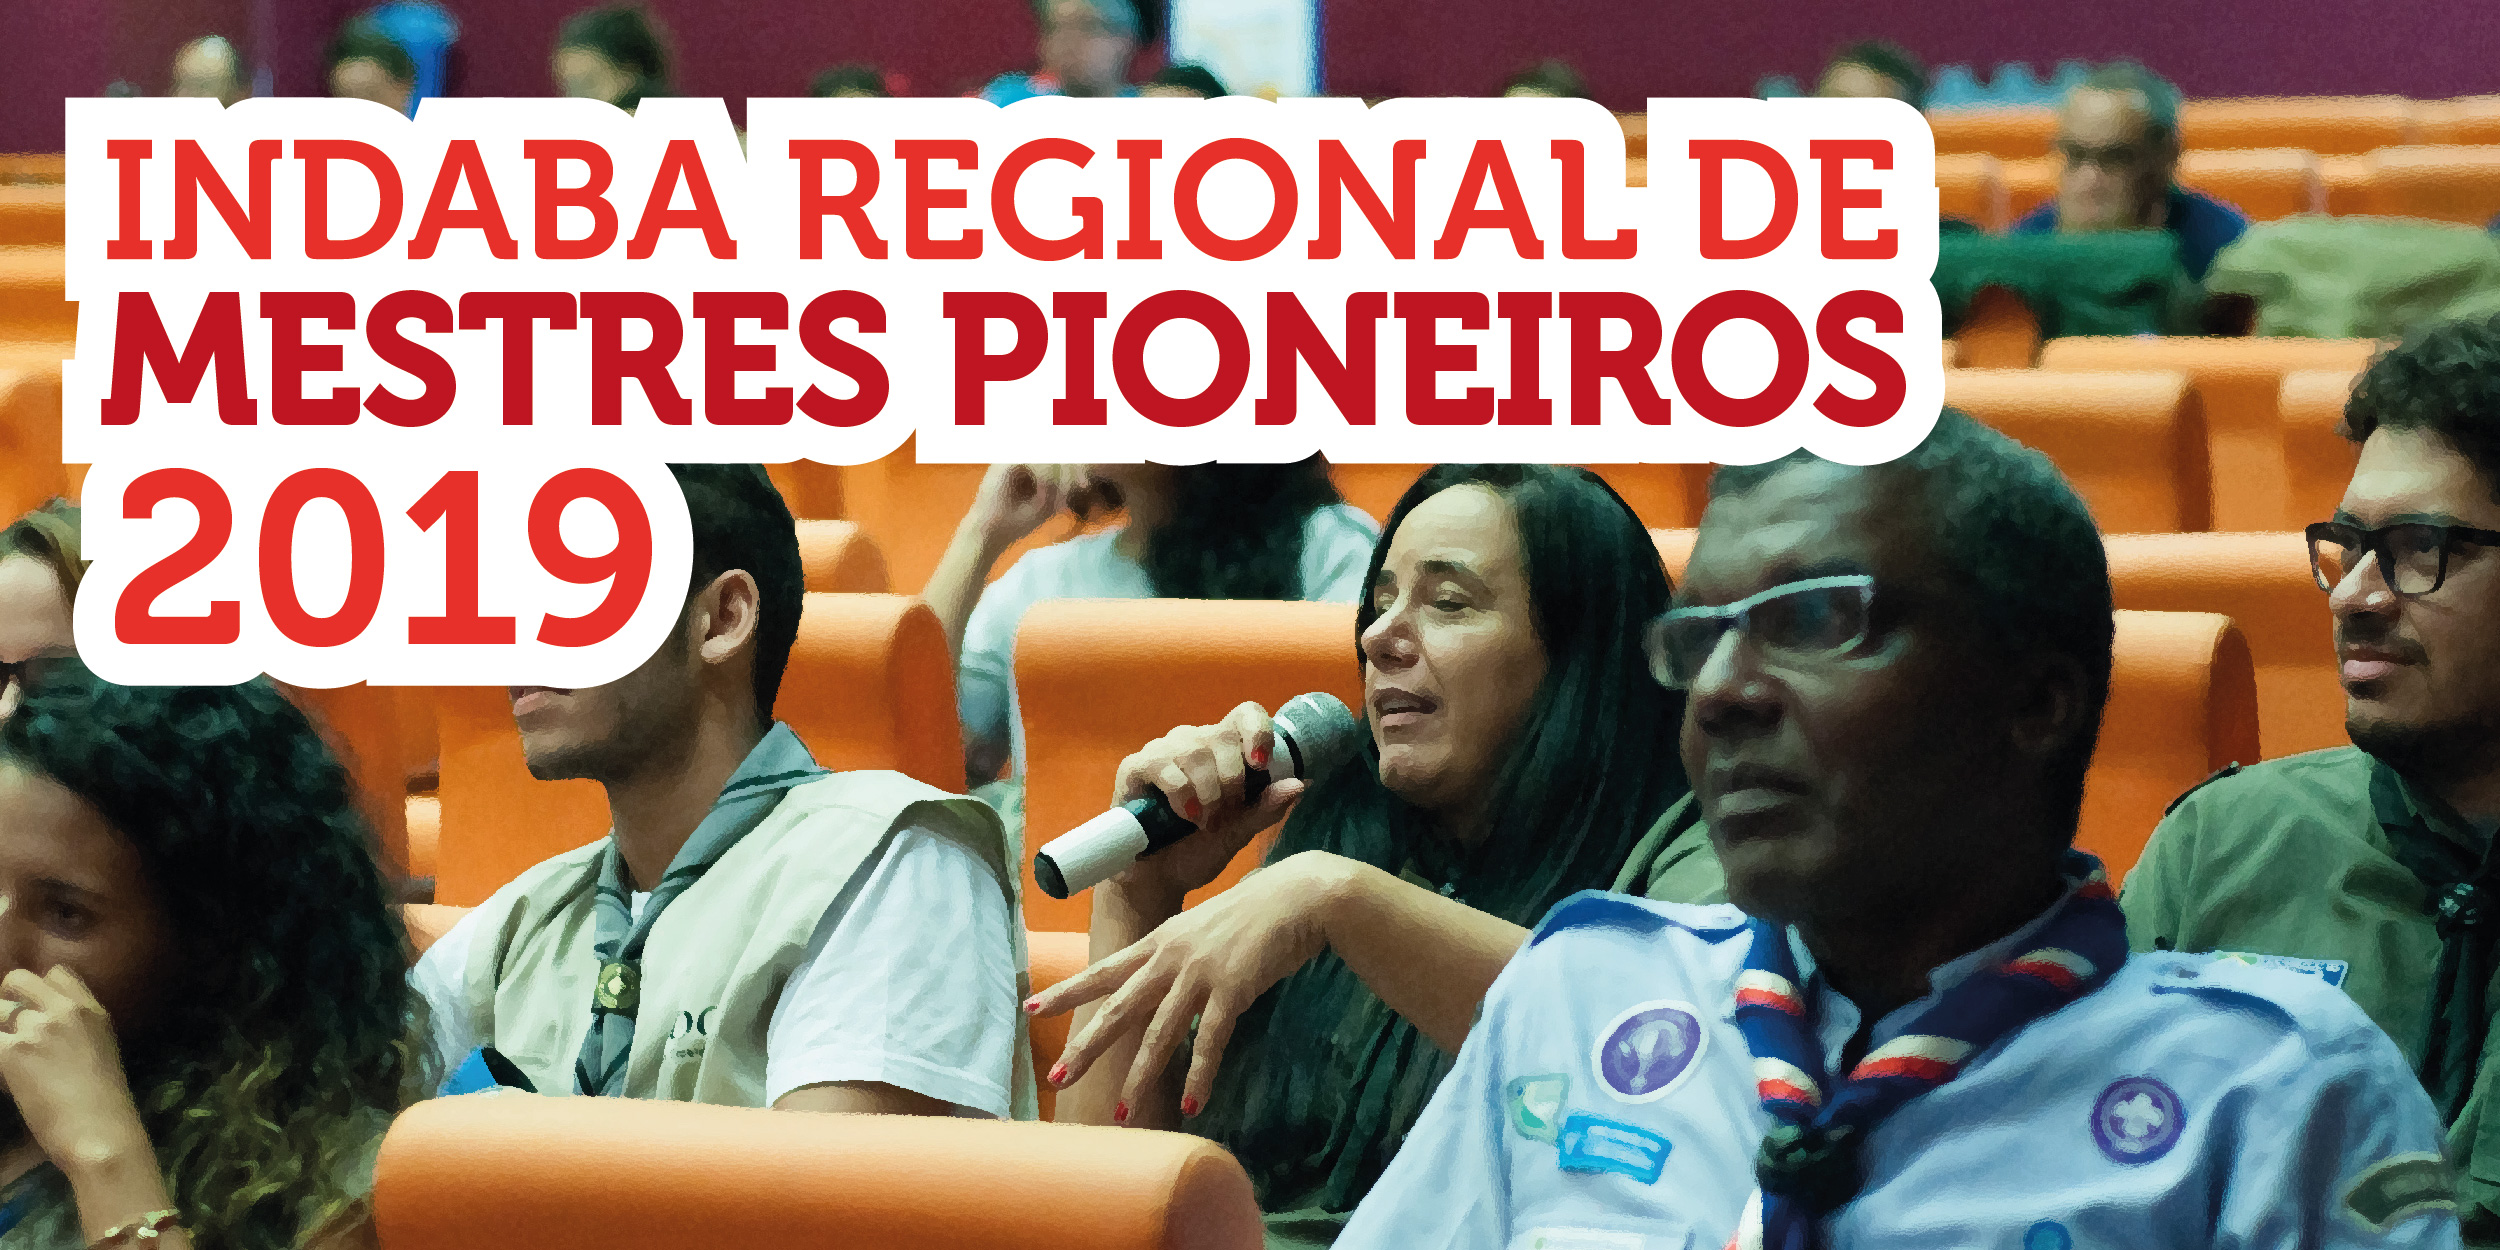 INDABA REGIONAL DE MESTRES PIONEIROS 2019